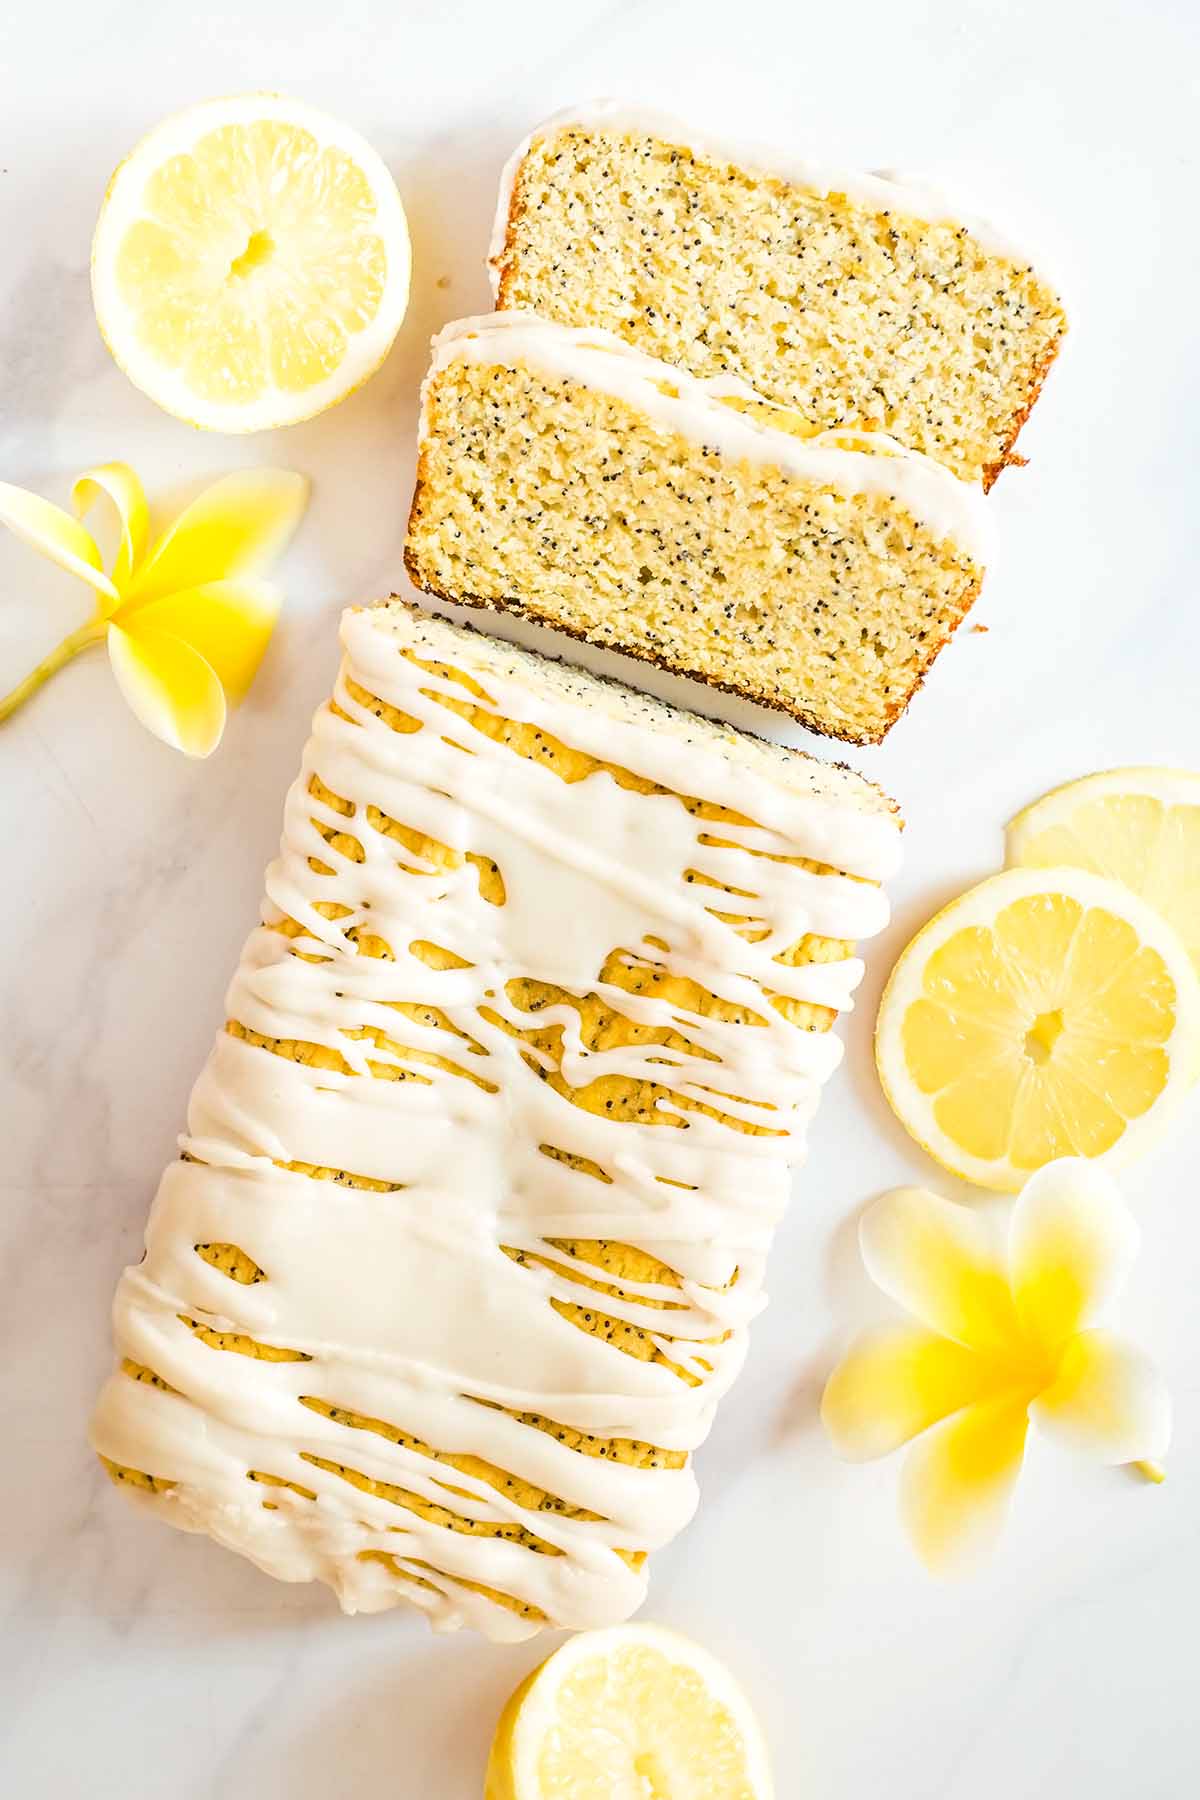 Healthy lemon loaf overhead shot with lemon slices and plumeria flowers